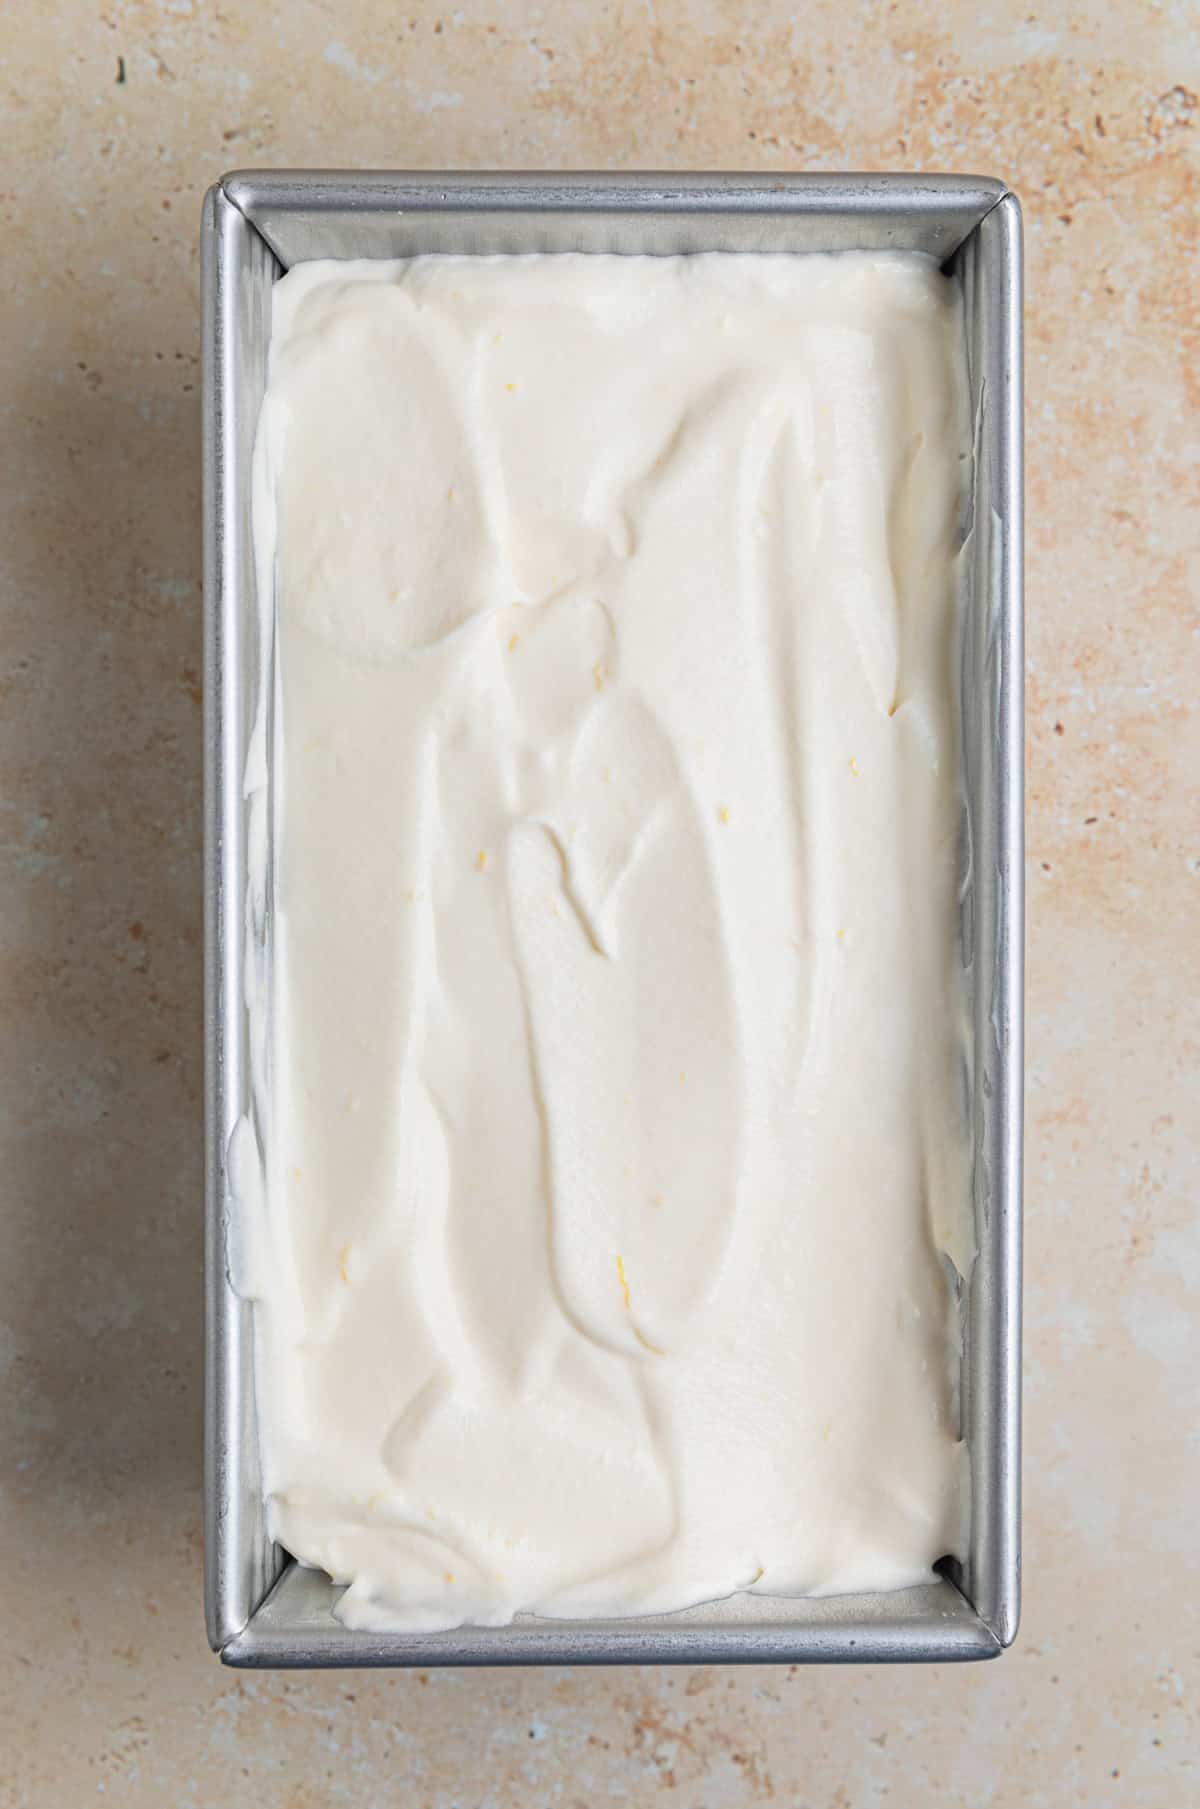 Bread pan with lemon ice cream mixture before freezing.